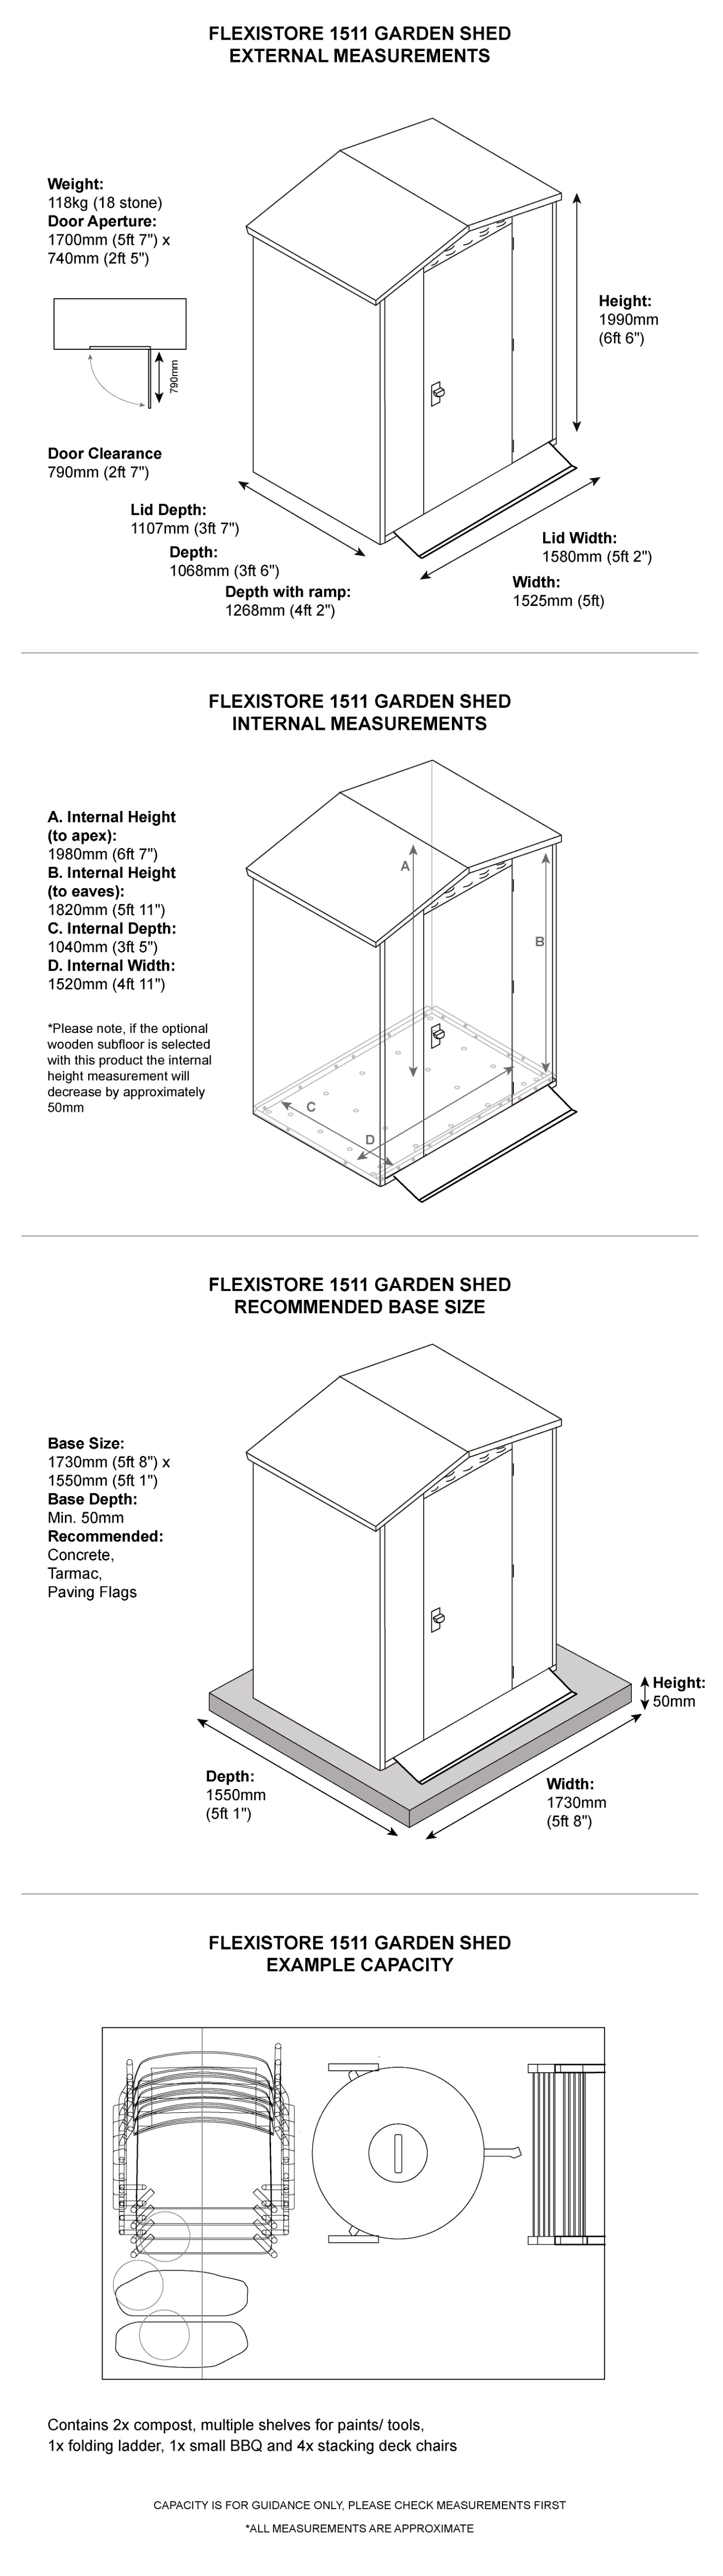 Flexistore 5x4 metal garden shed